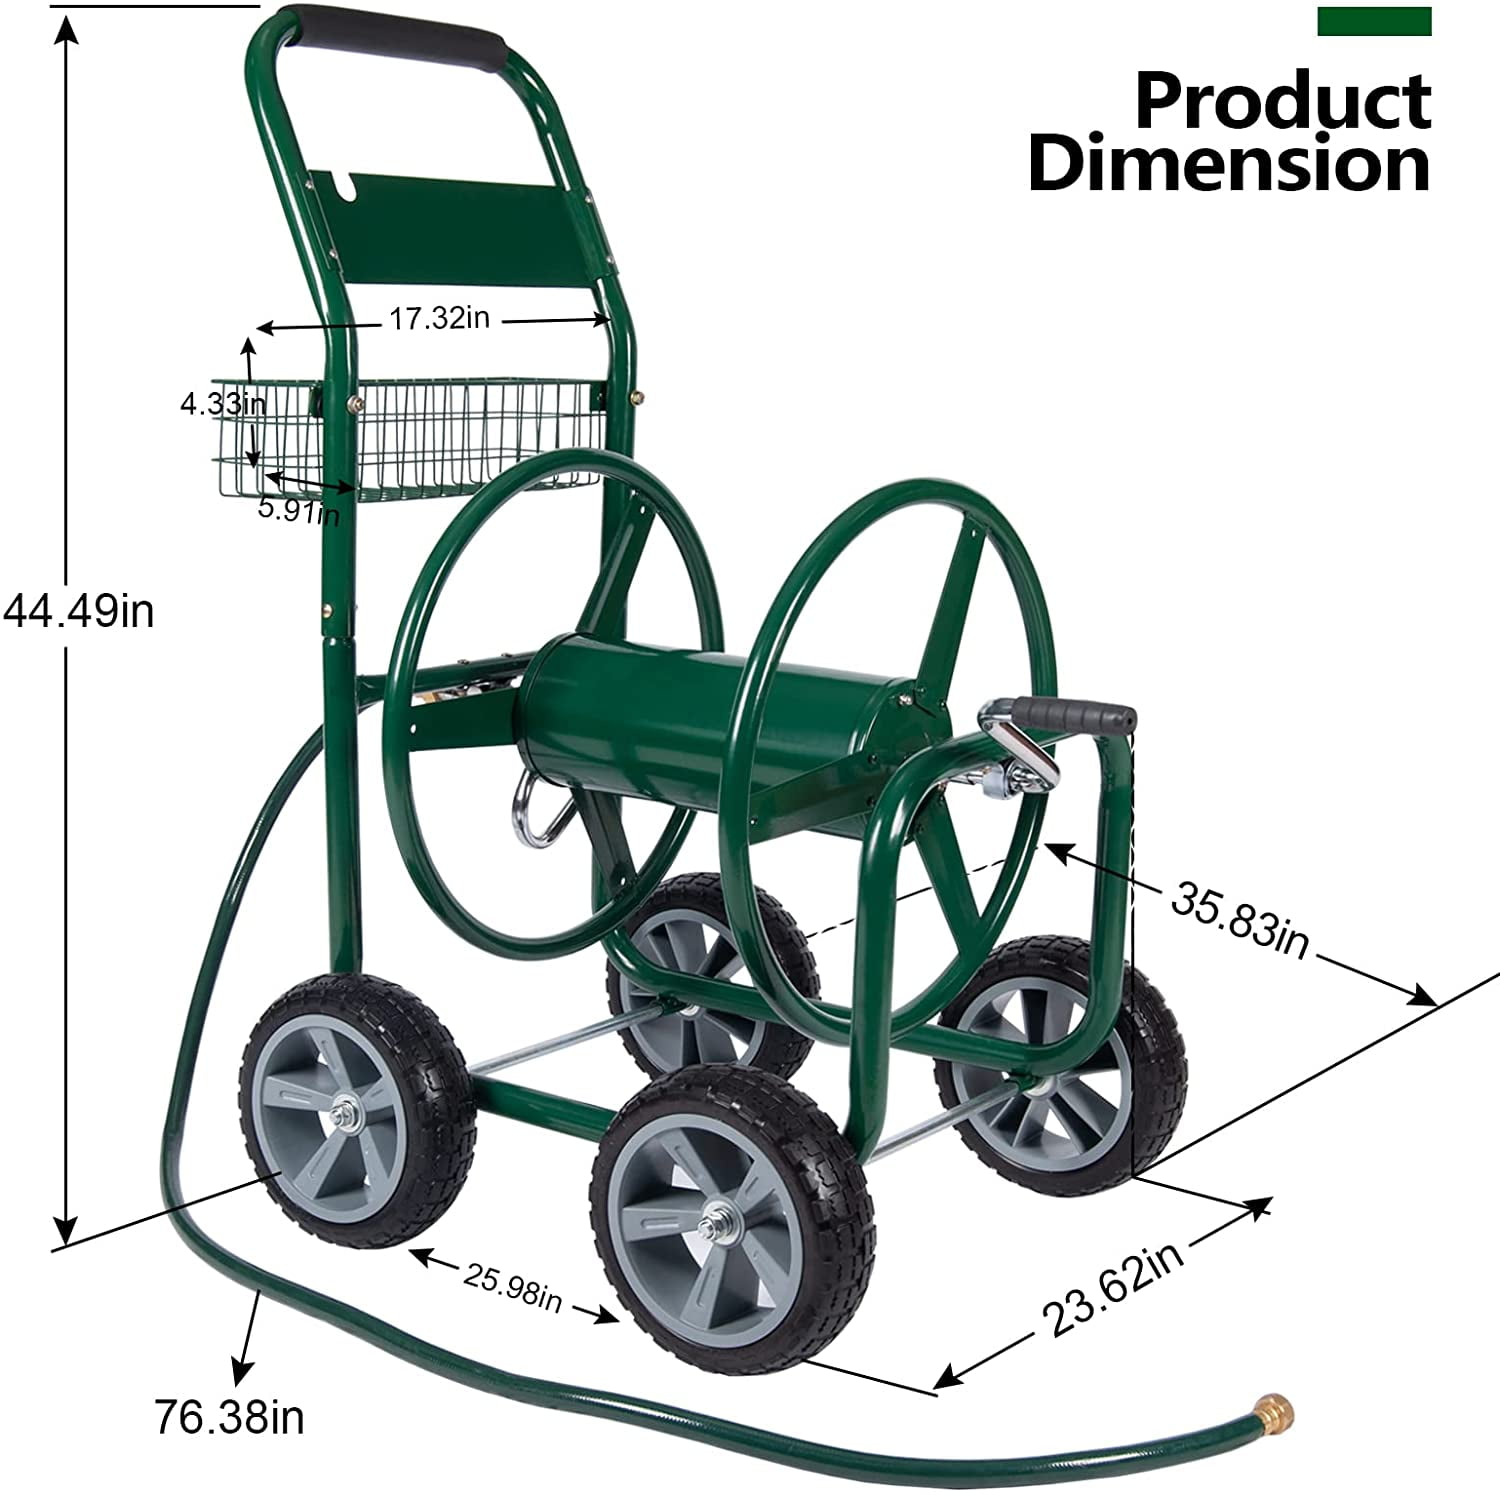 4-Wheel Industrial Hose Reel Cart with No-Flat Wheels, 400Ft Hose